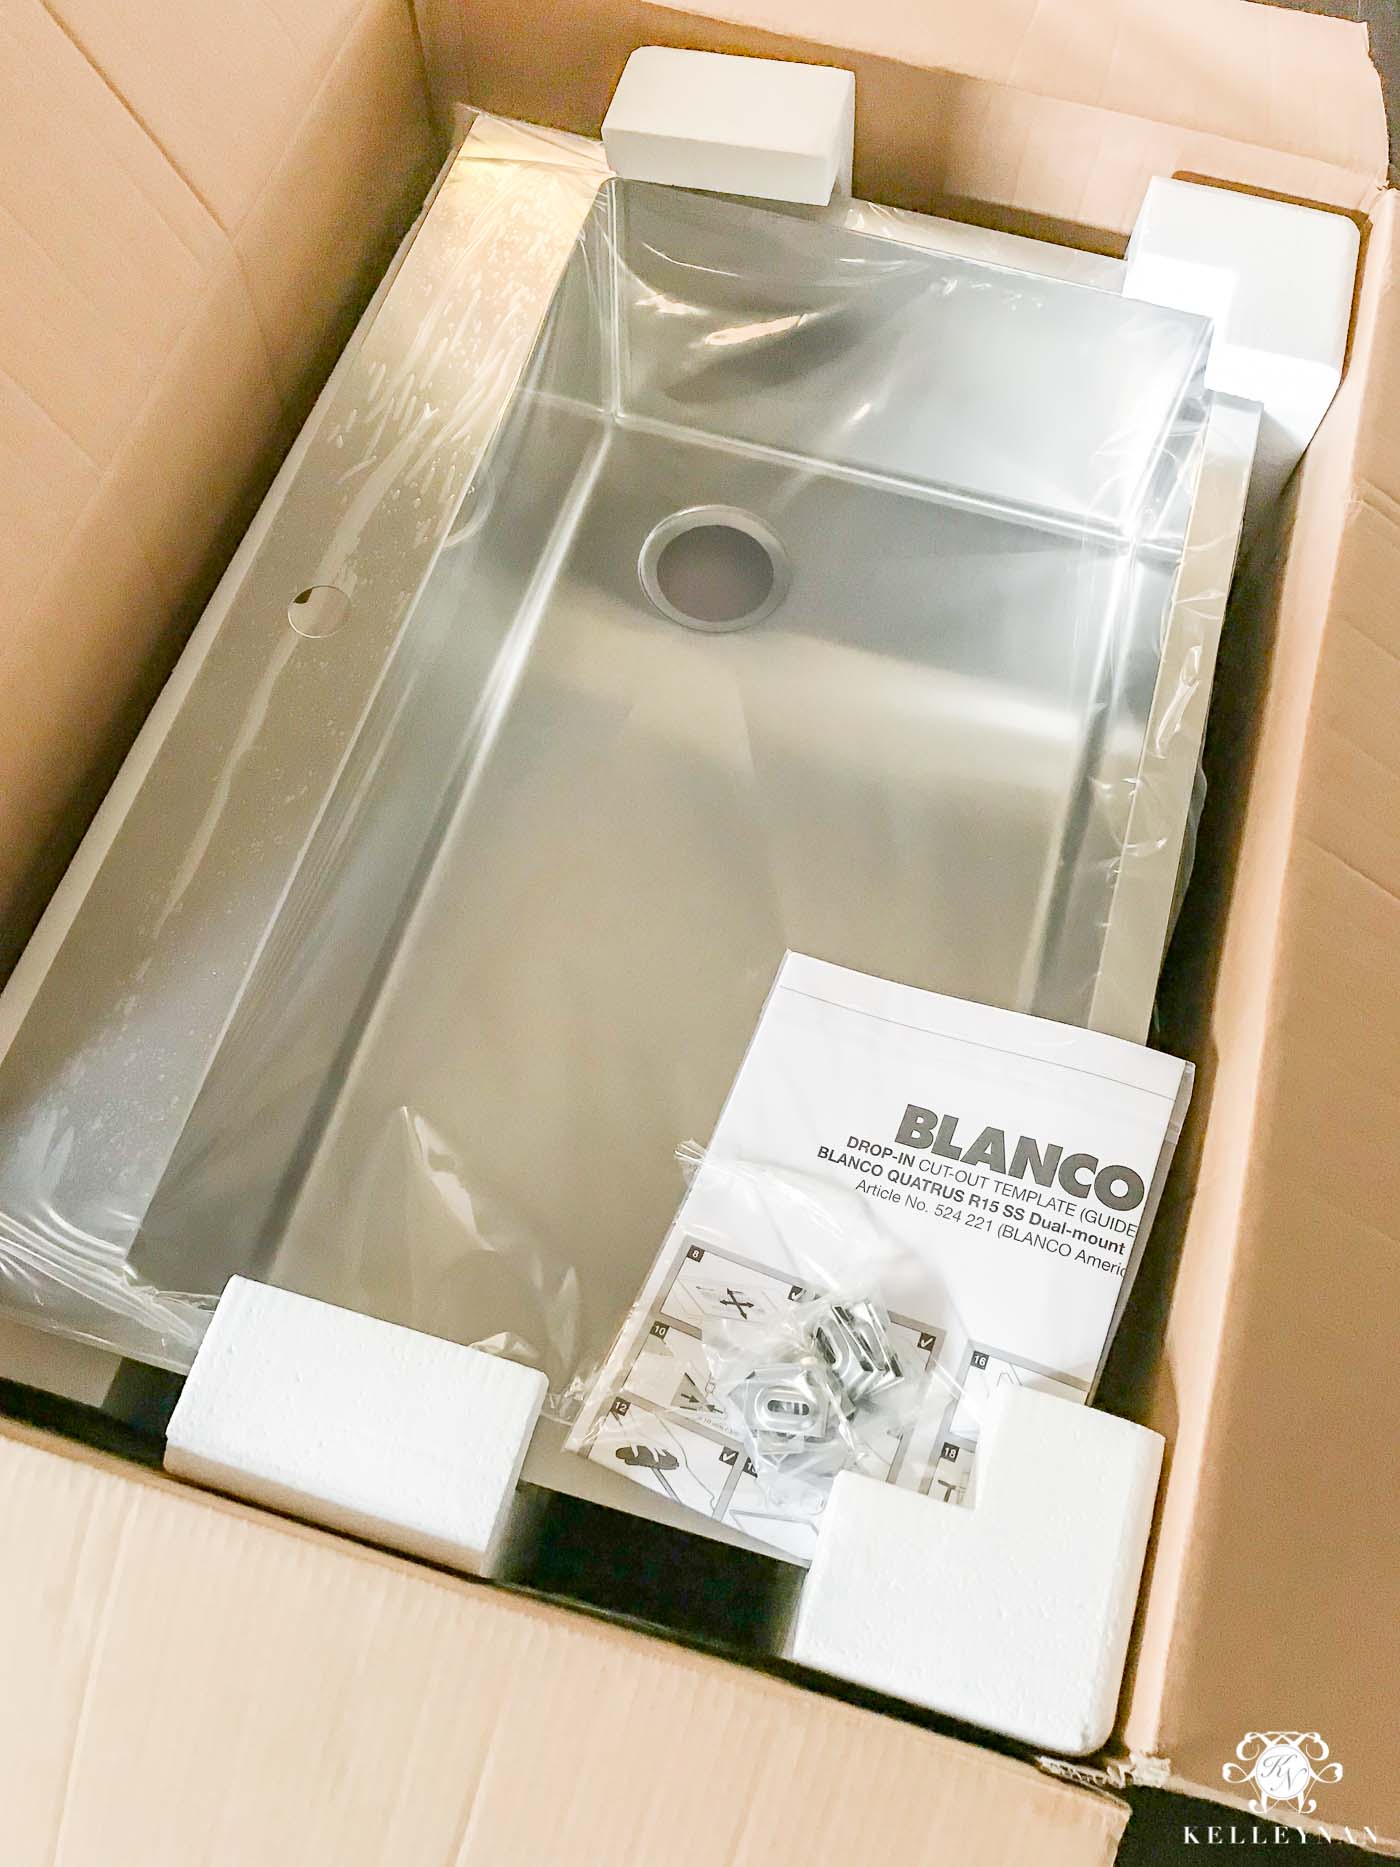 Blanco stainless steel under mount sink